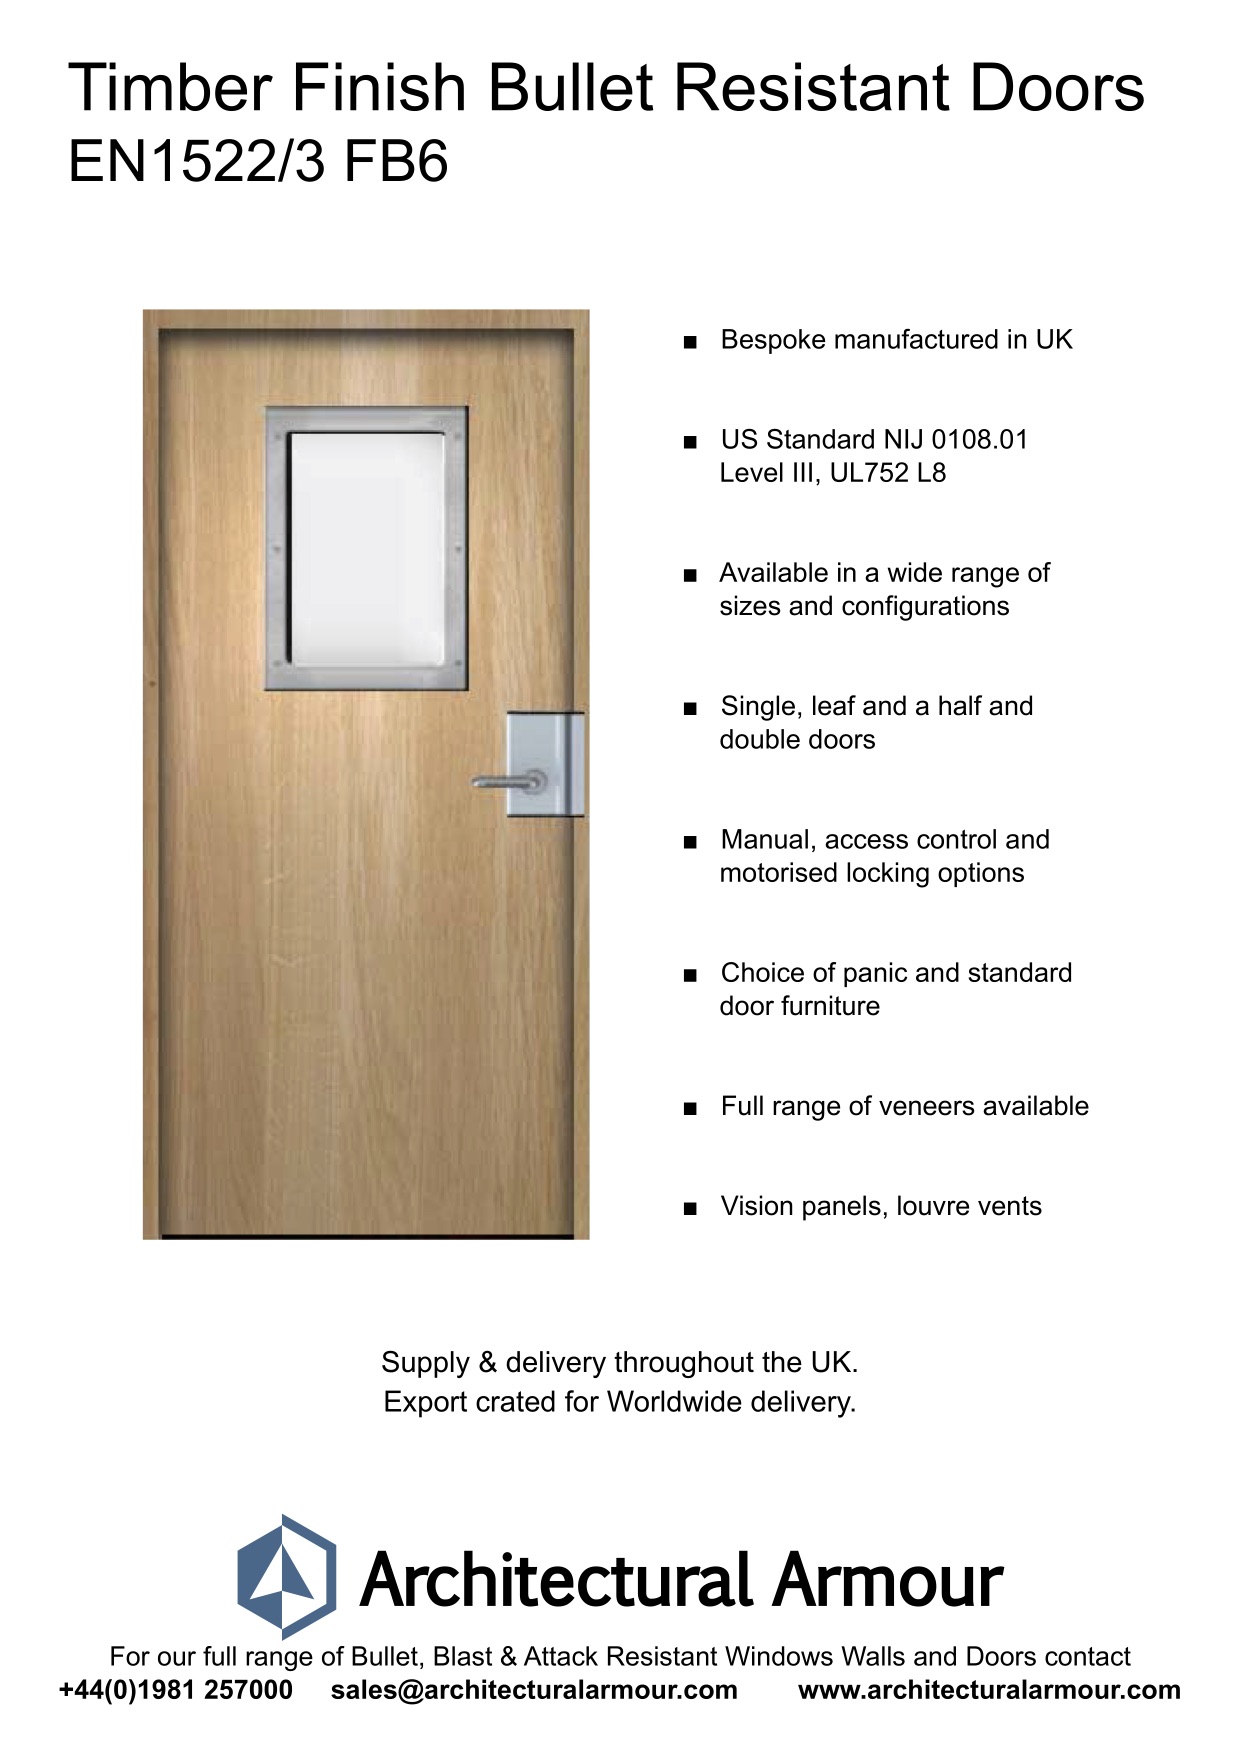 EN1522-3-FB6-Vision-Panel-Bullet-Resistant-Timber-Finish-Door